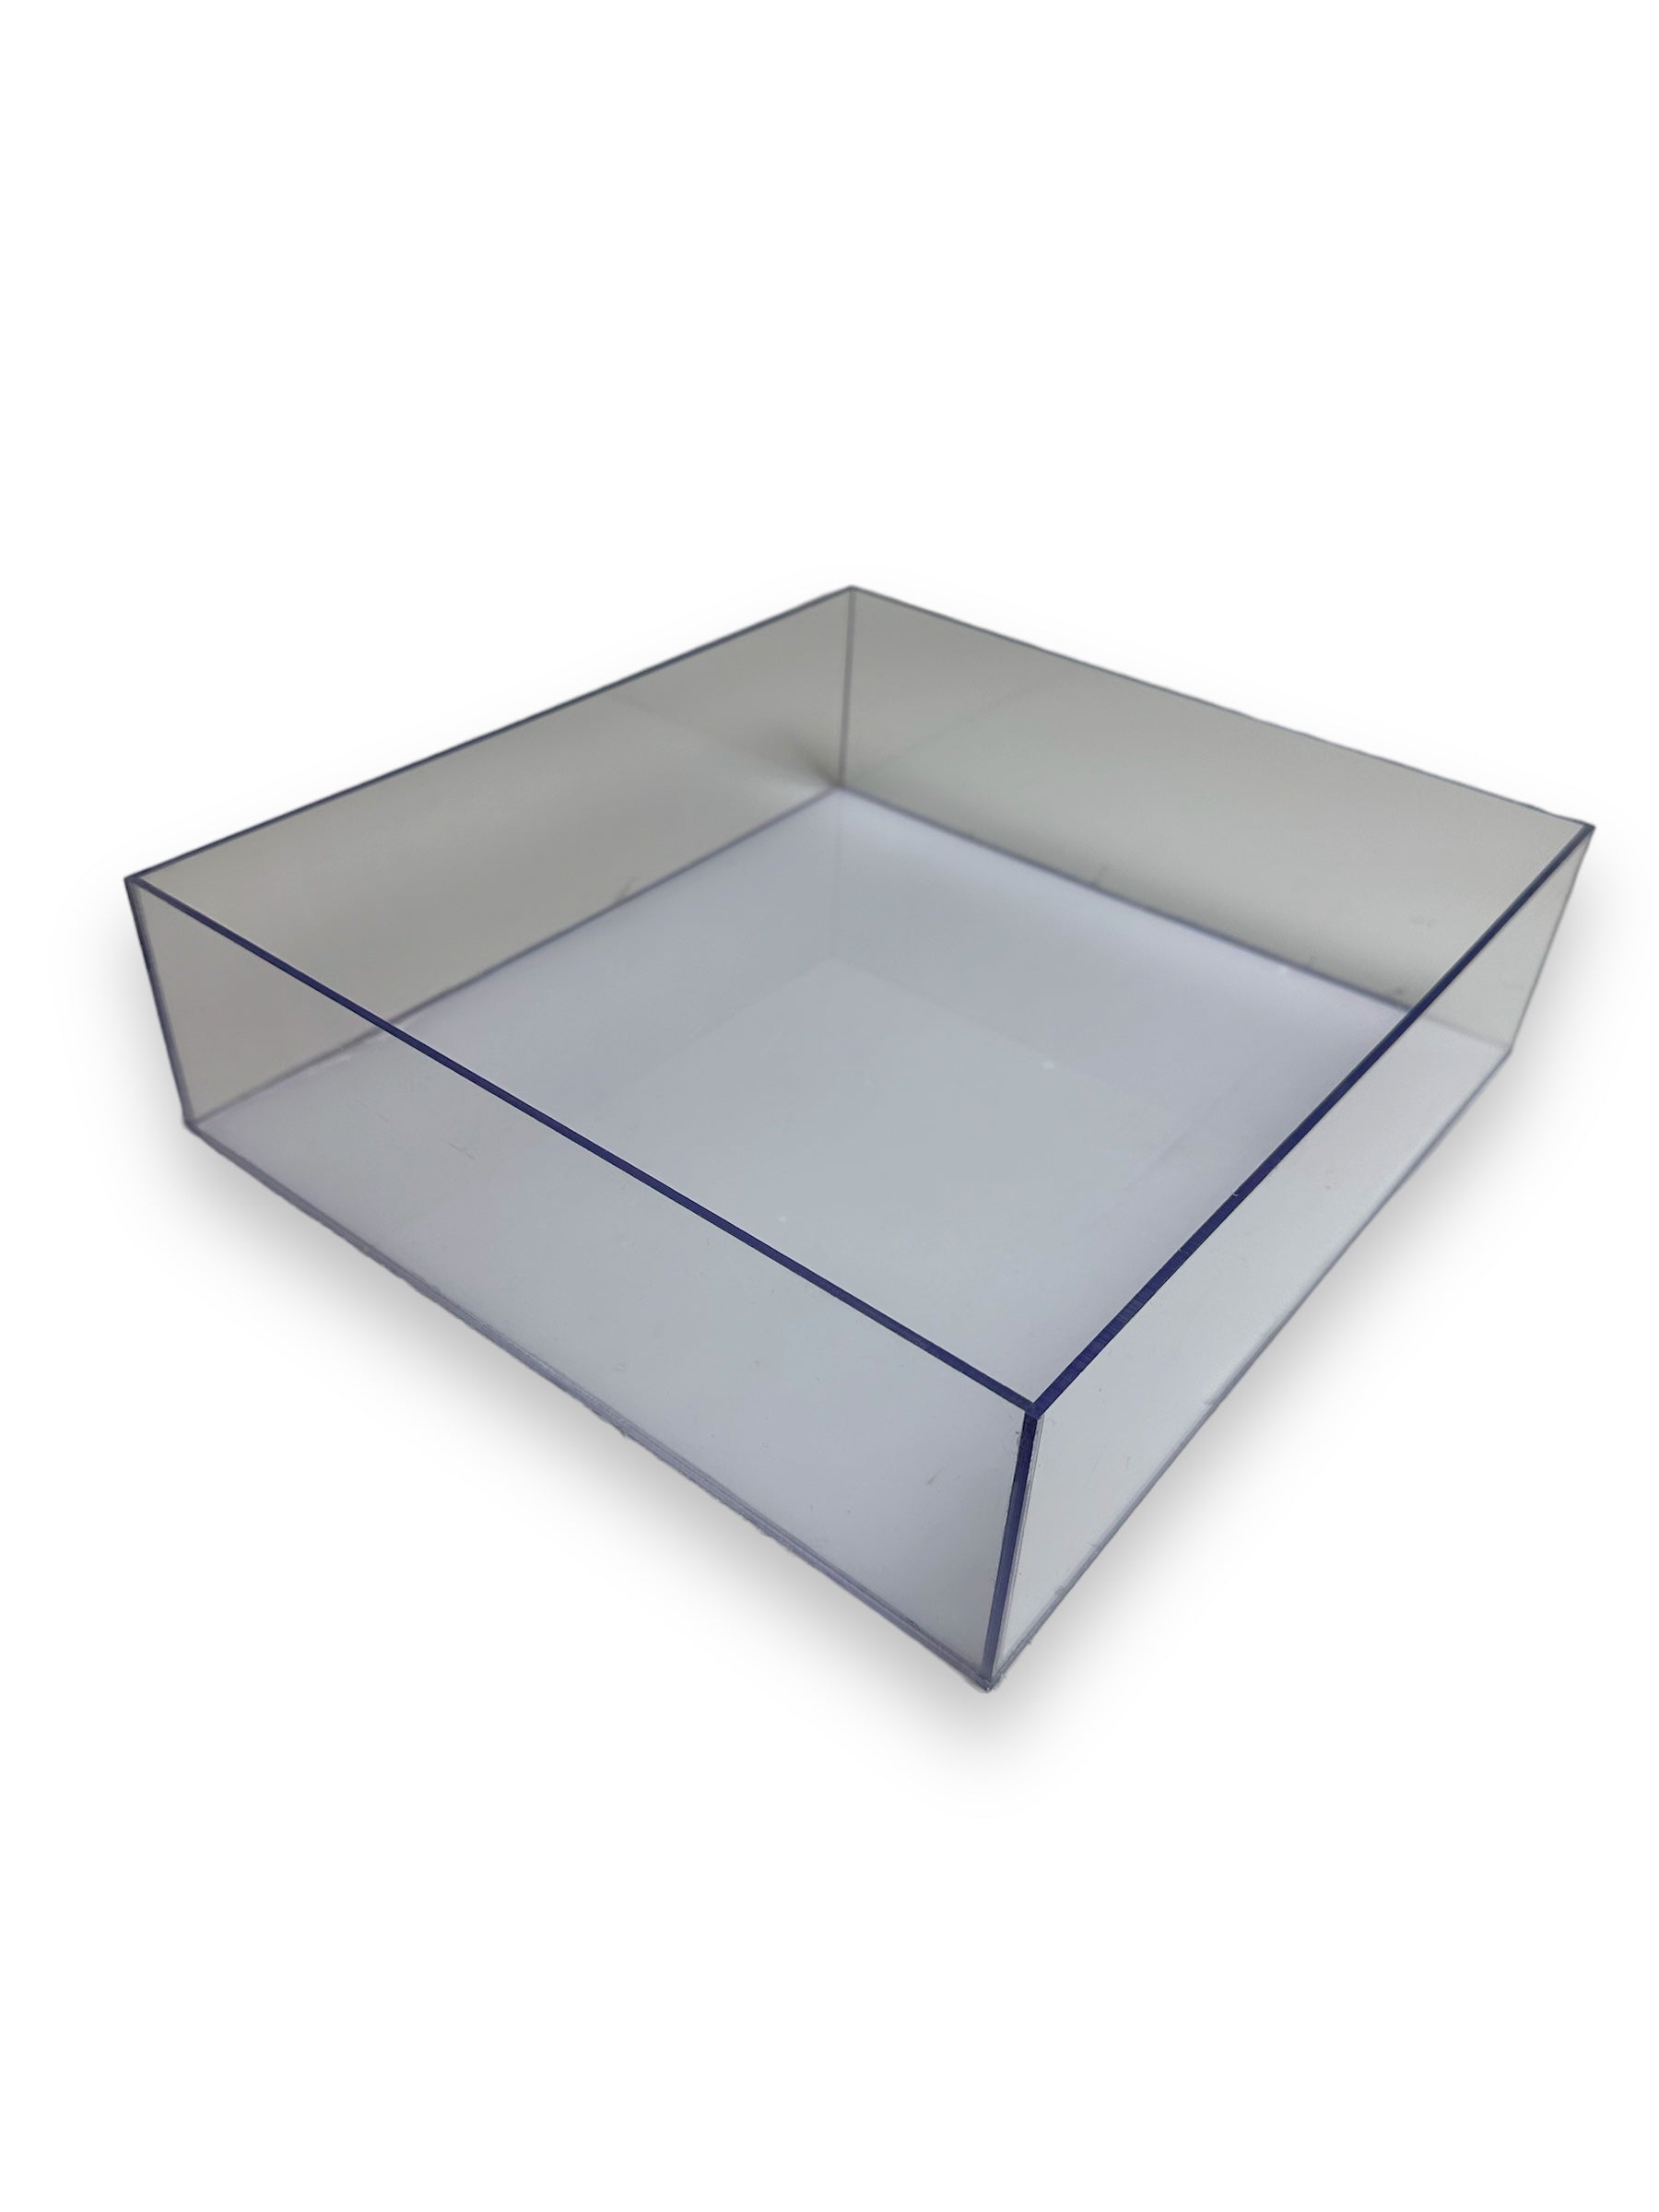 Custom made clear lexan polycarbonate tray box